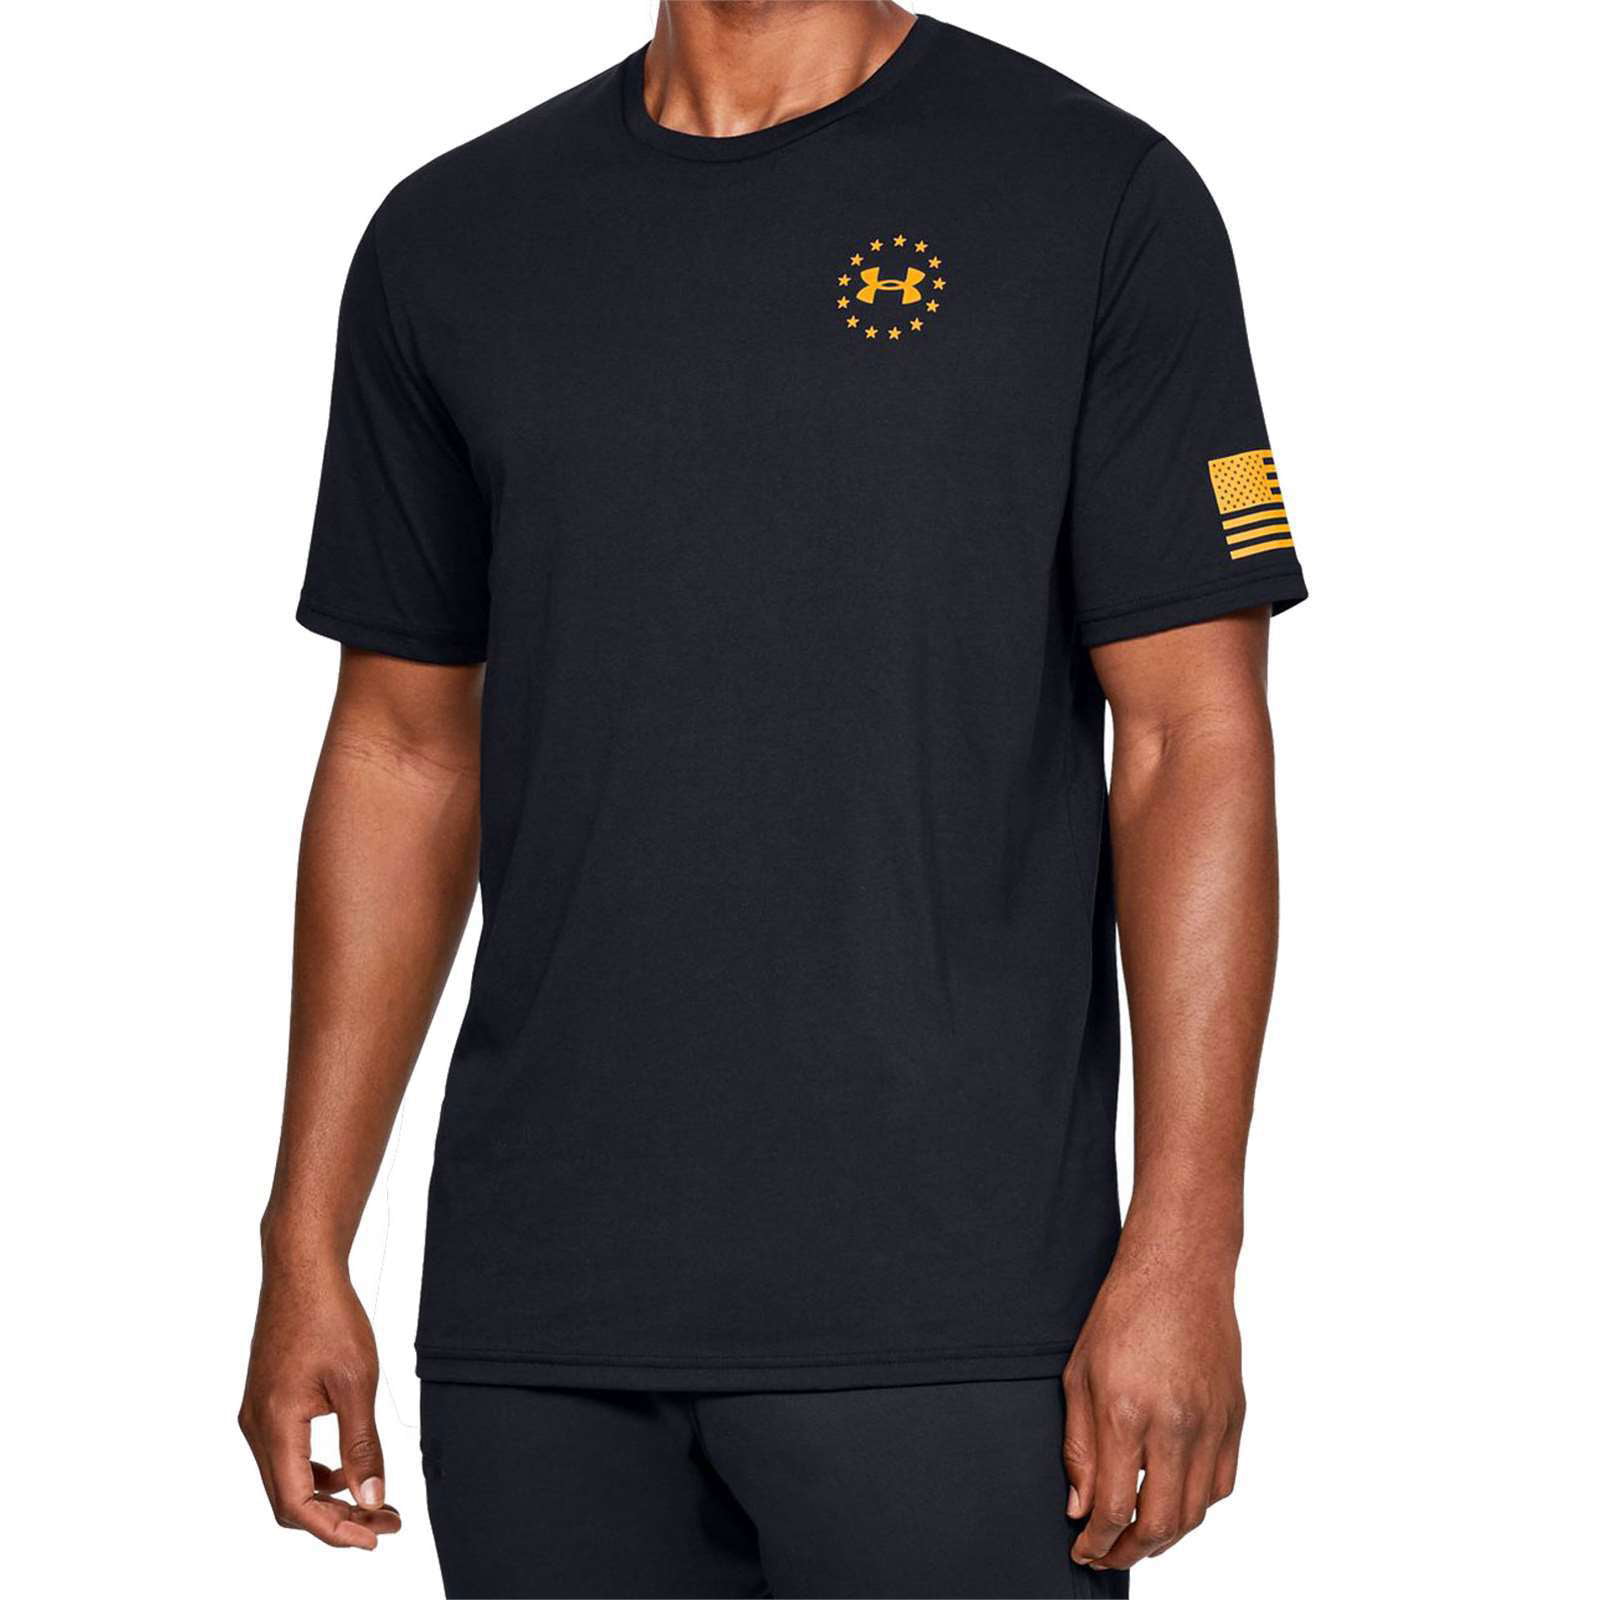 Under Armour Men's Tech Freedom Short Sleeve T-Shirt - Black, XL